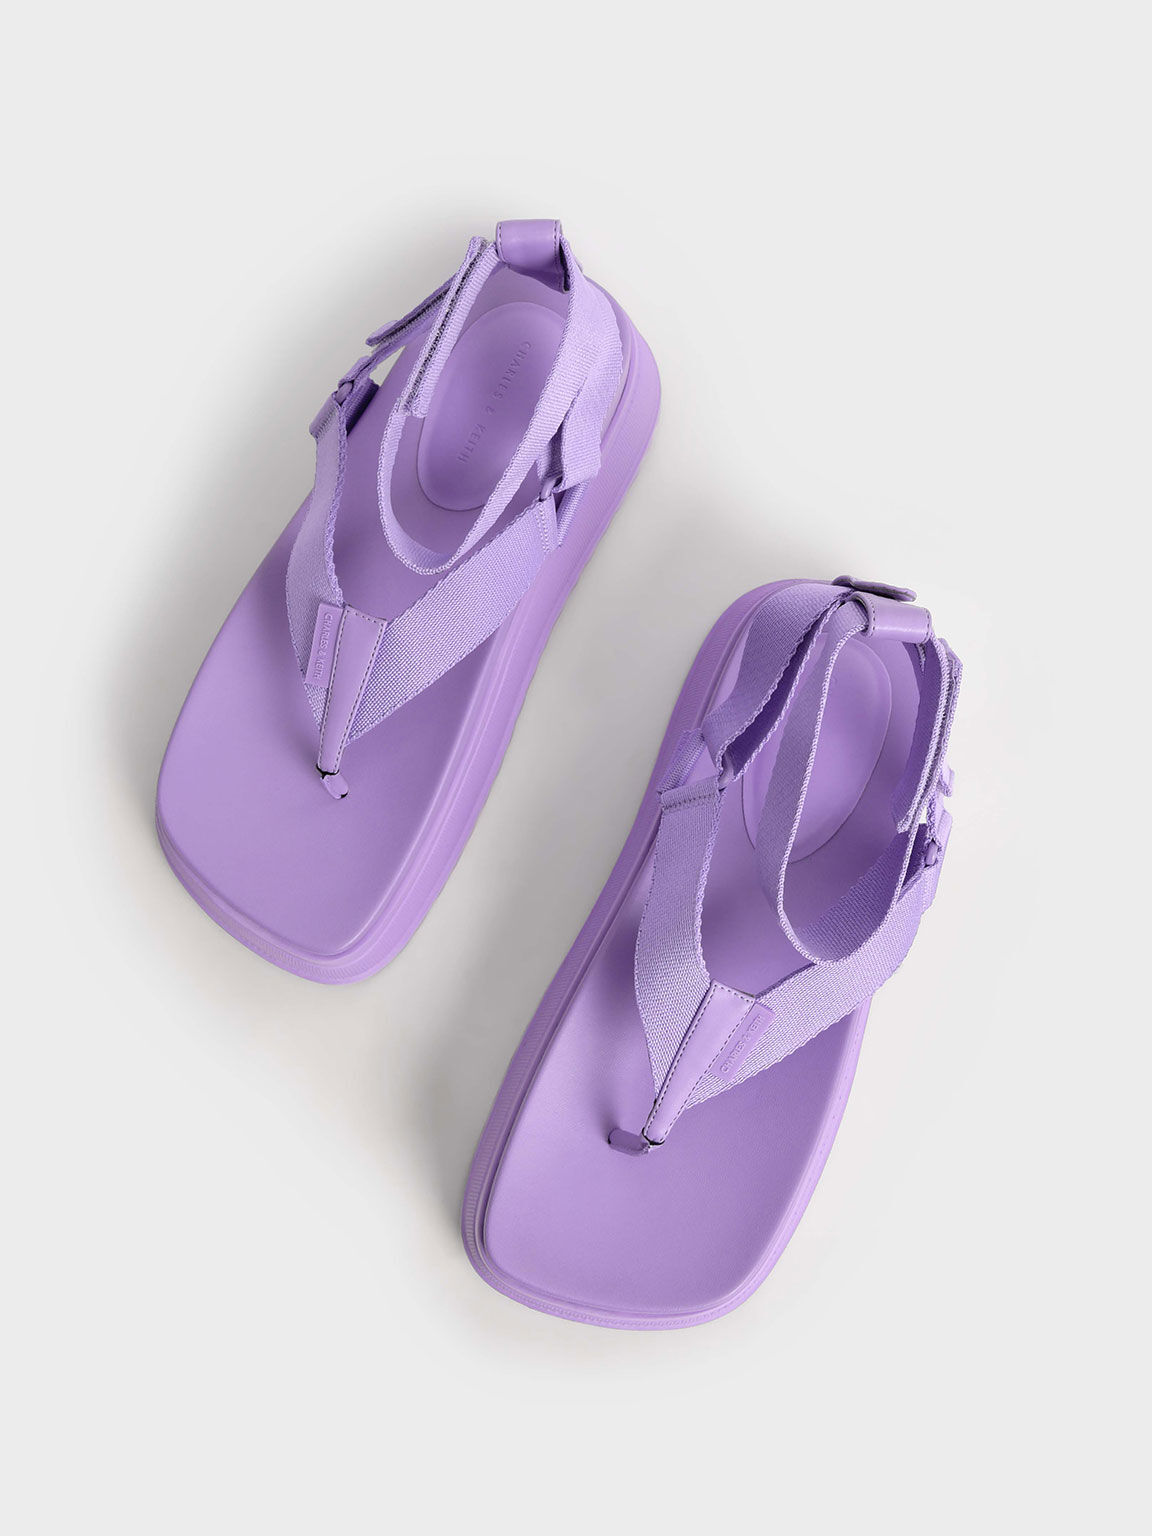 Sandal Thong Joss Flatform Ankle-Strap, Purple, hi-res